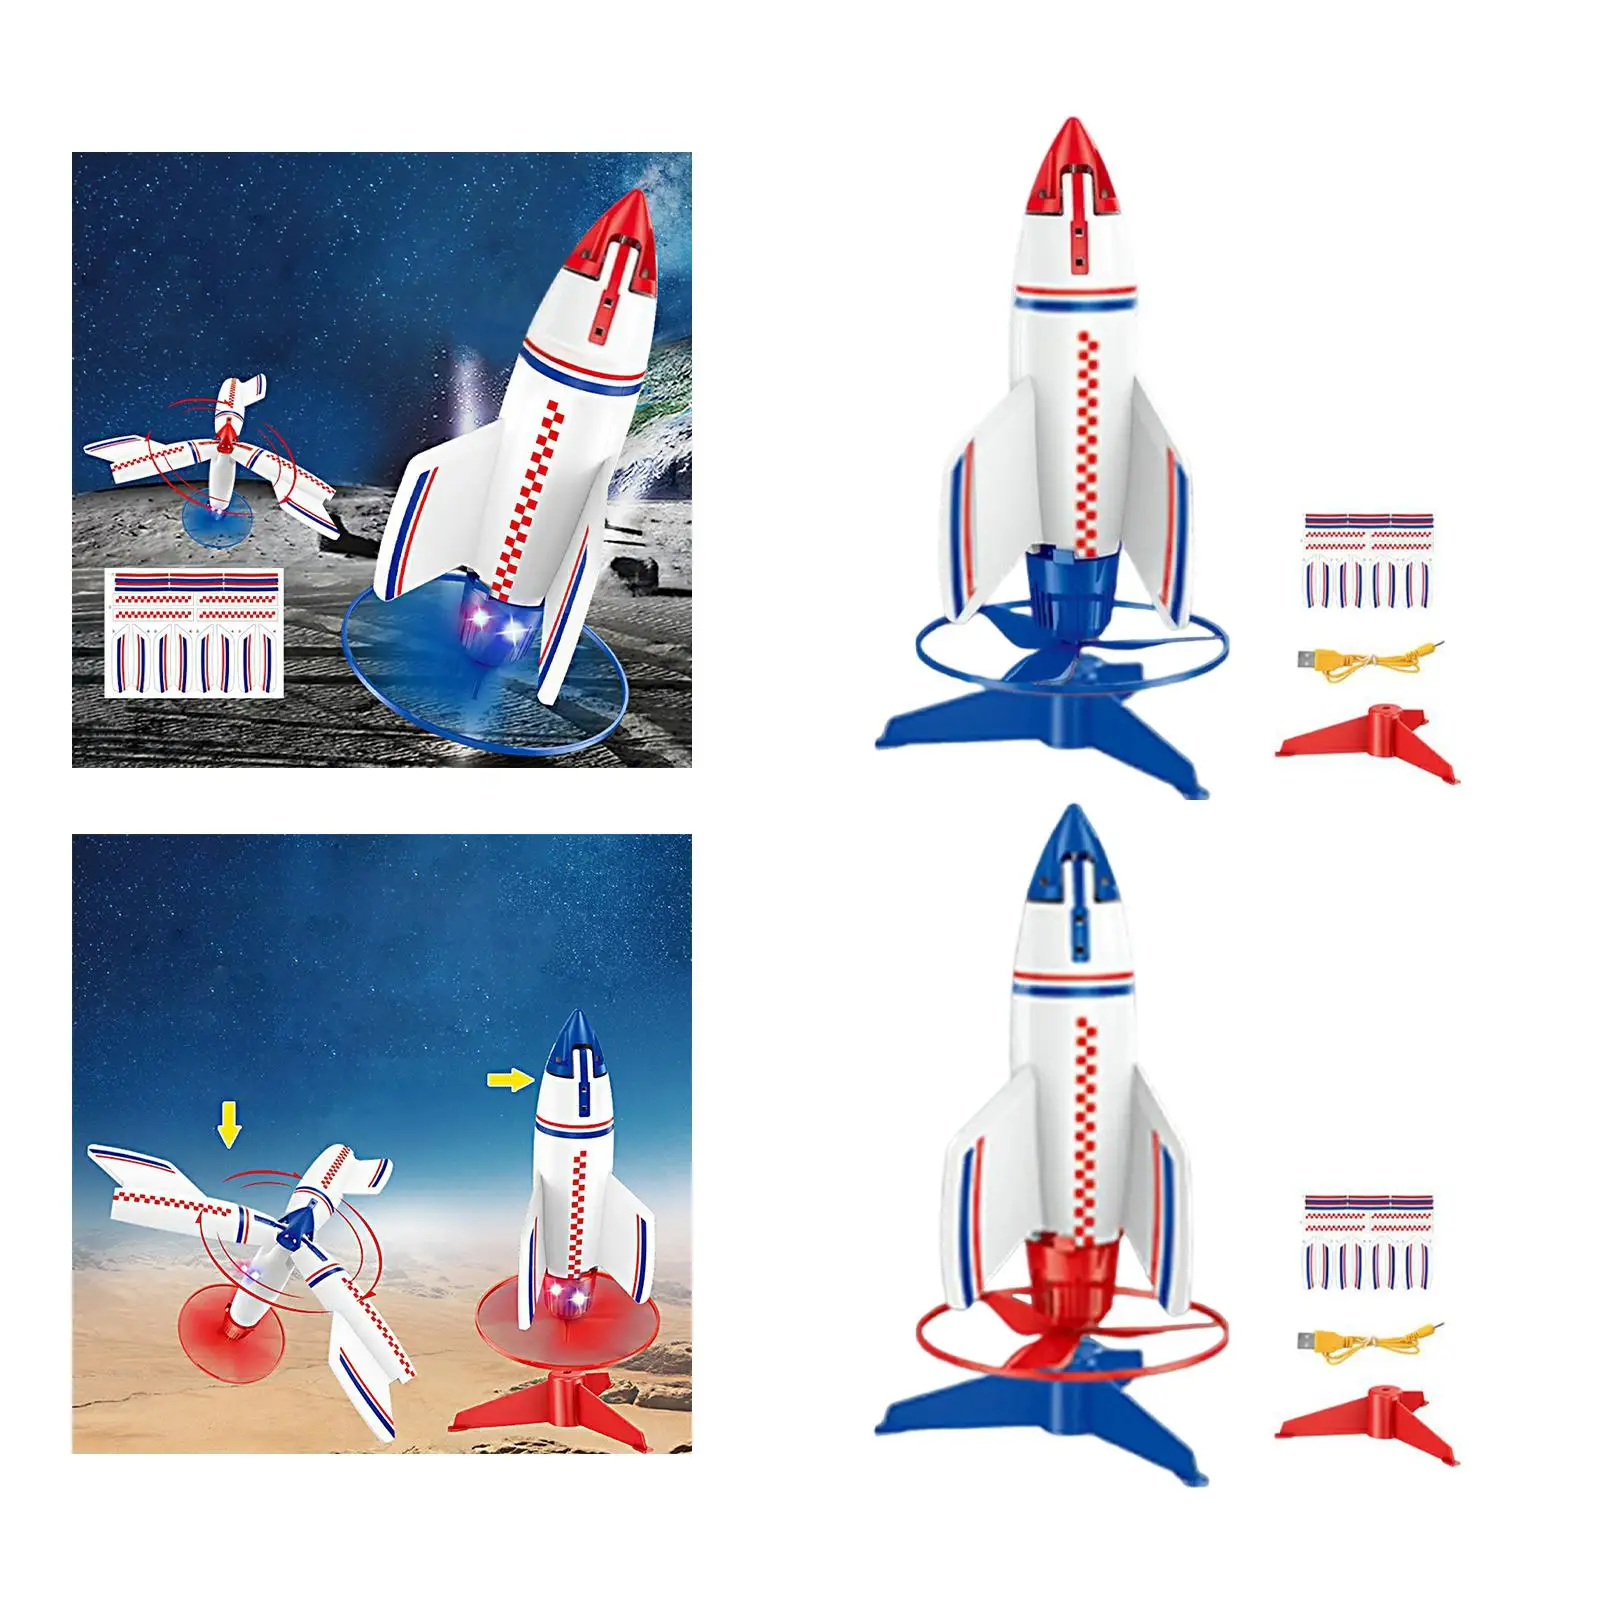 Rocket Launcher for kids Higher Foam Rockets for boys Toddlers